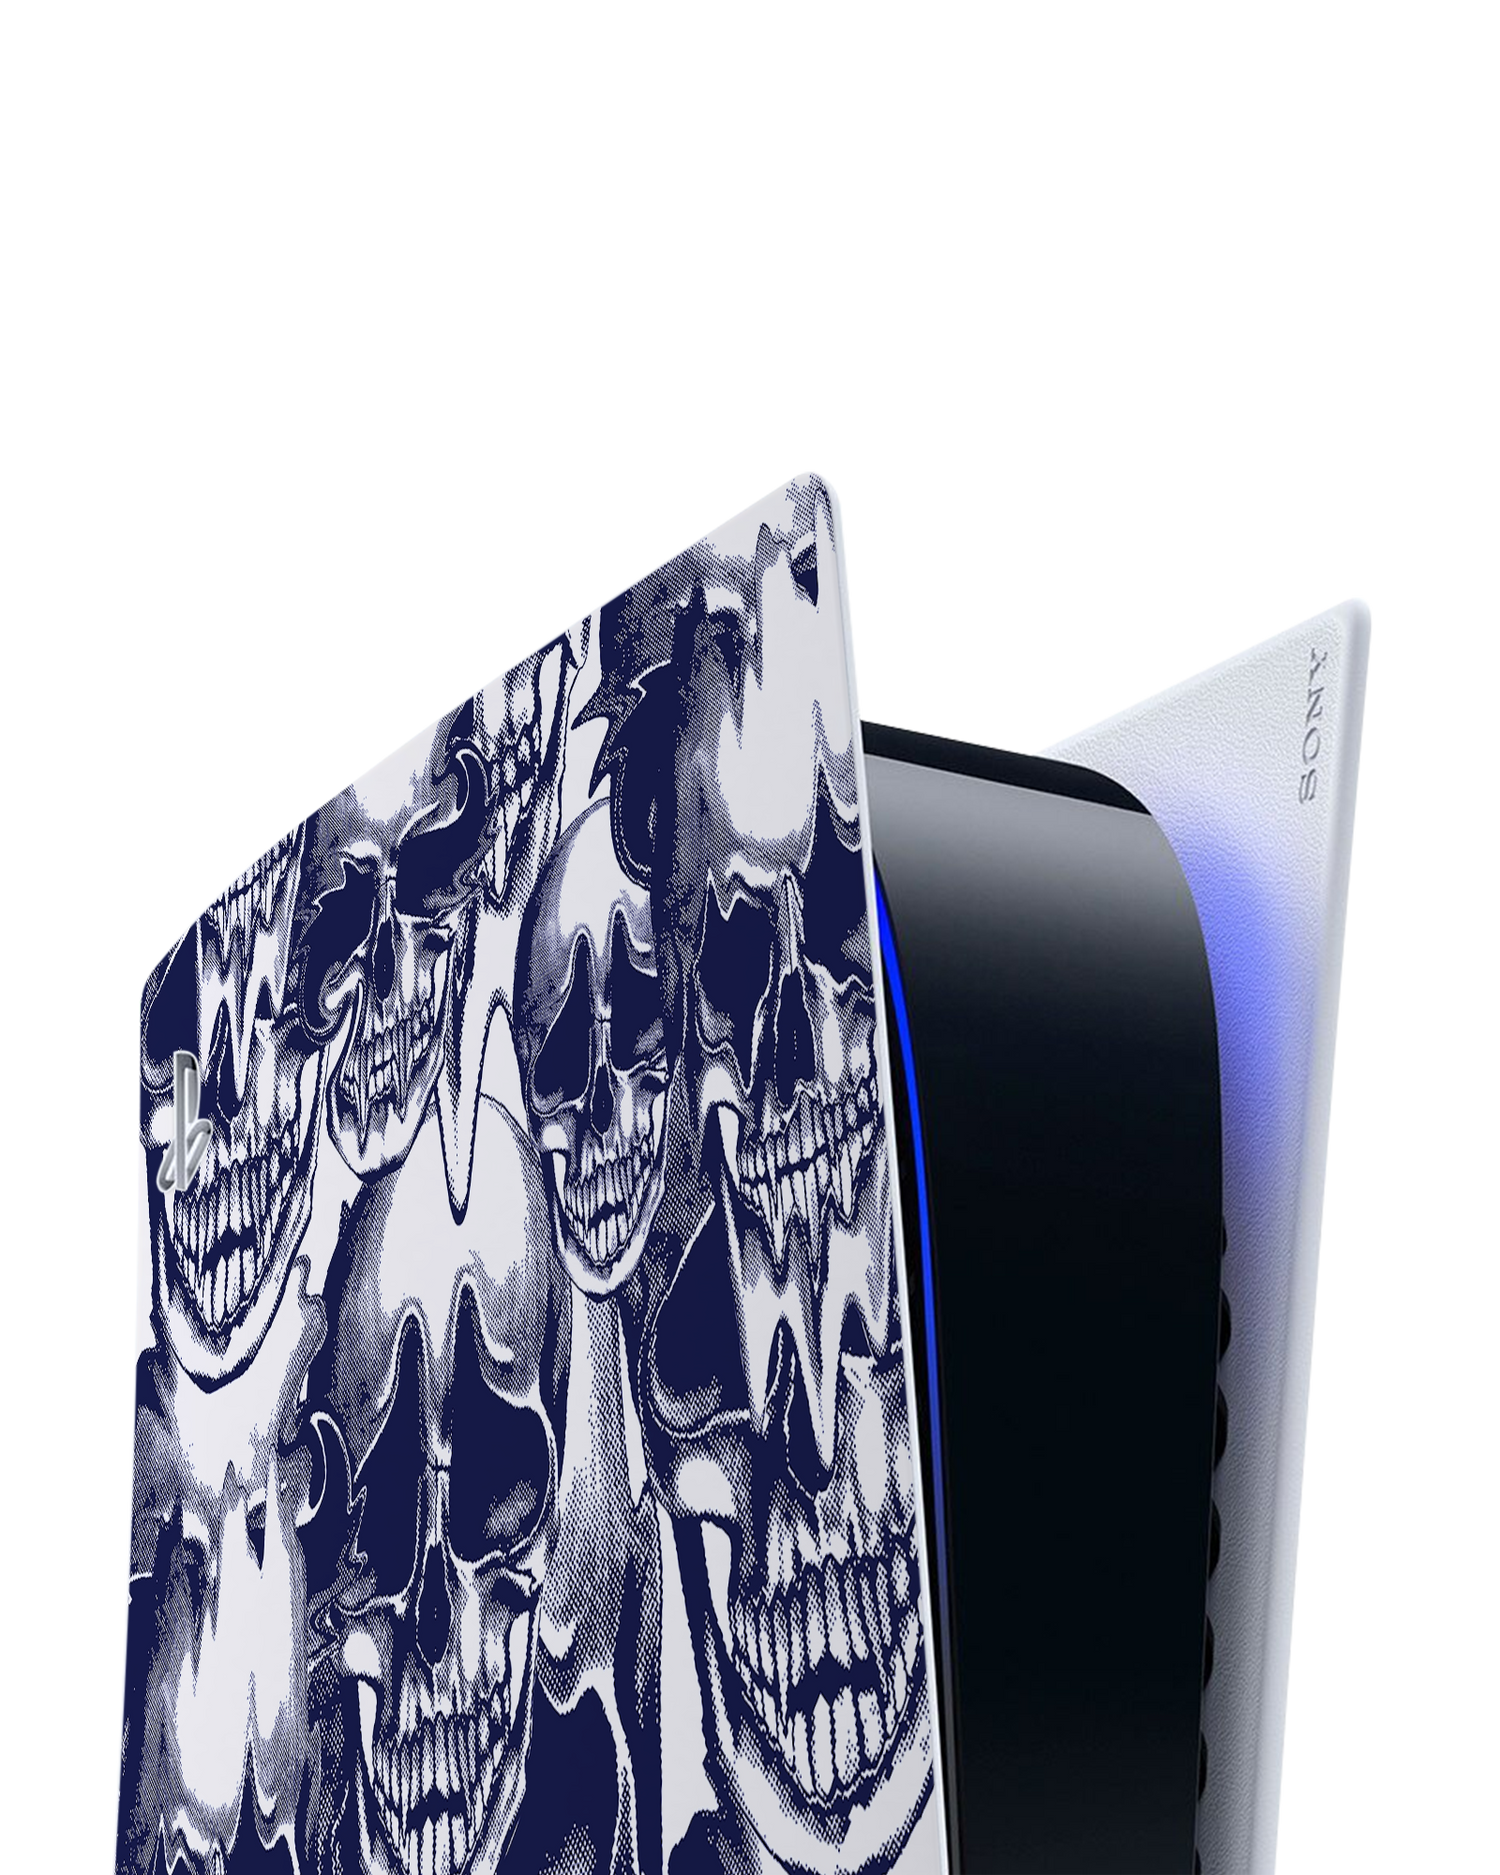 Warped Skulls Console Skin for Sony PlayStation 5 Digital Edition: Detail shot